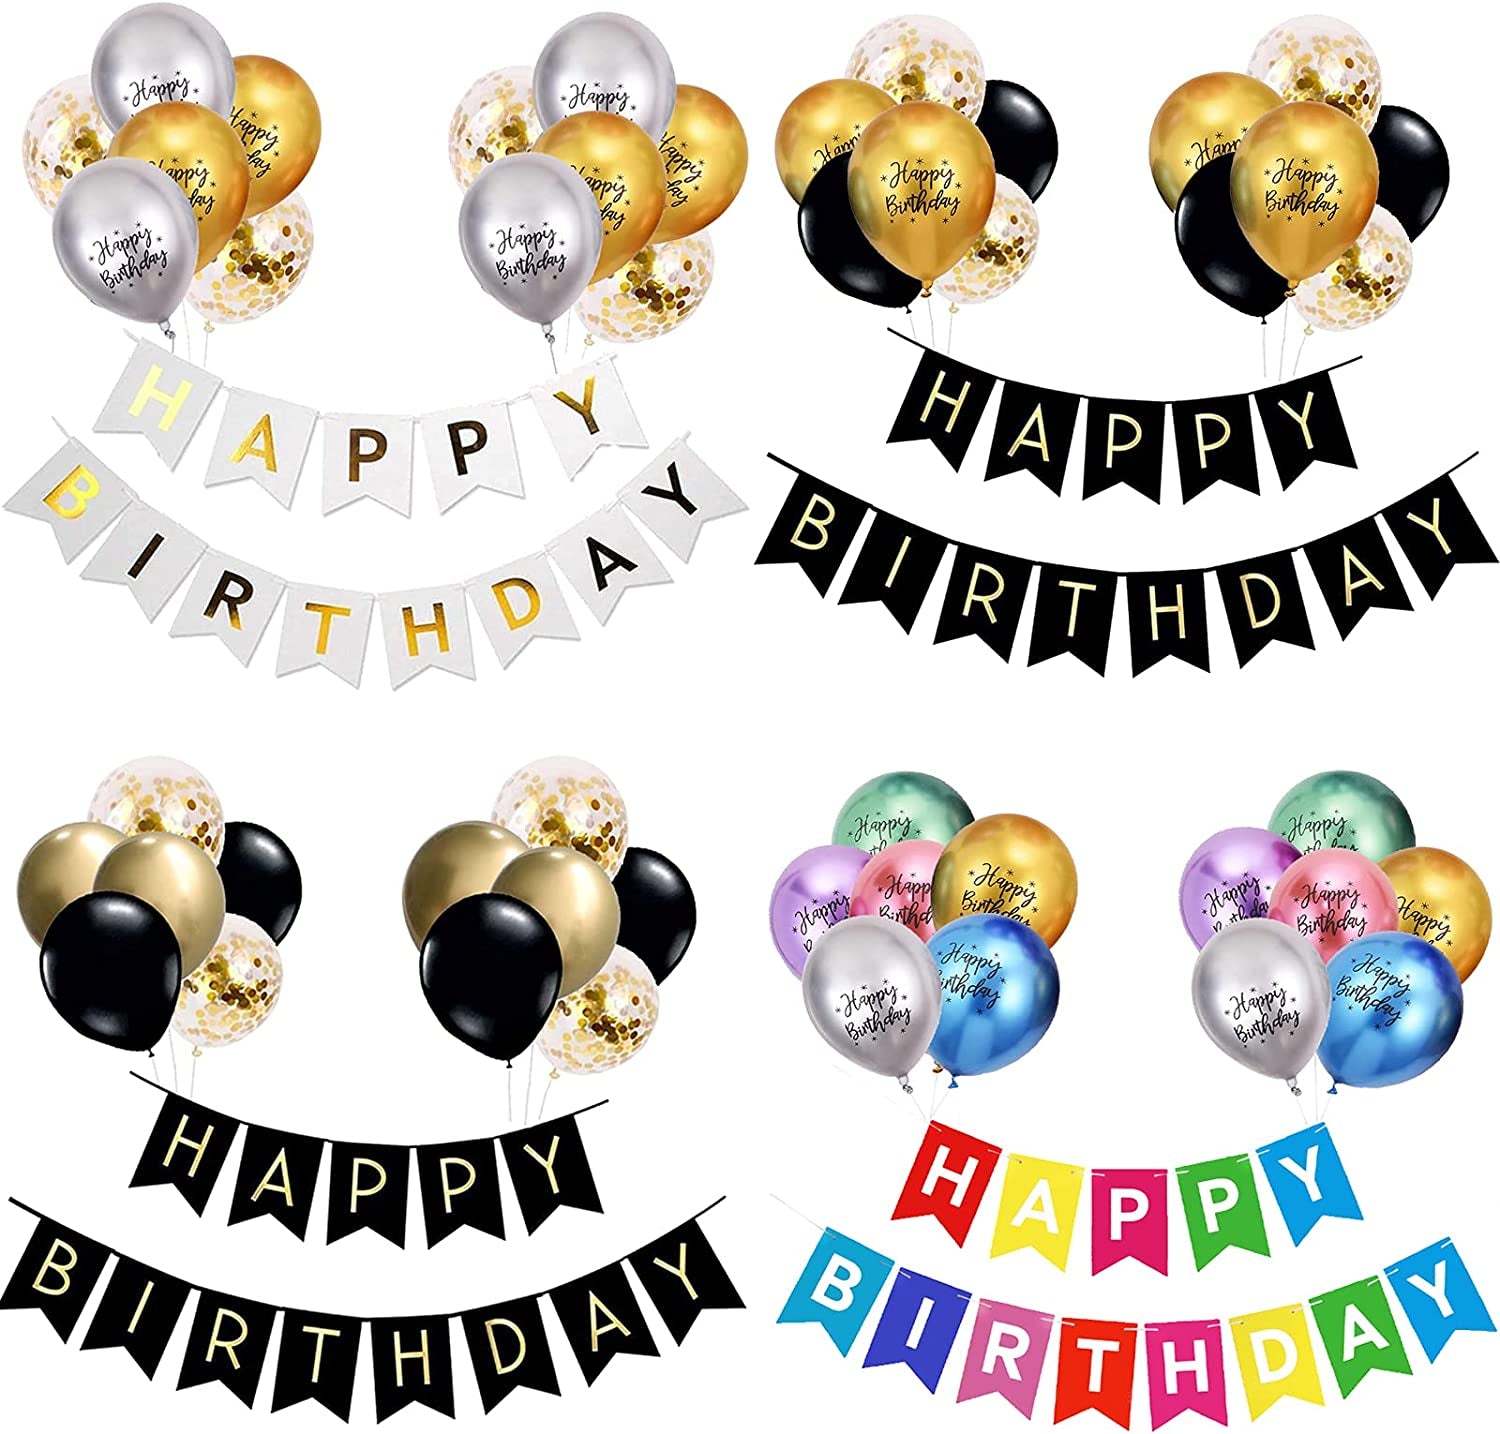 Happy Birthday Banner, Black Gold Party Decorations Happy Birthday Bunting Banners, 12 Inch Happy Birthday Balloons Perfect for Birthday Party Decorations